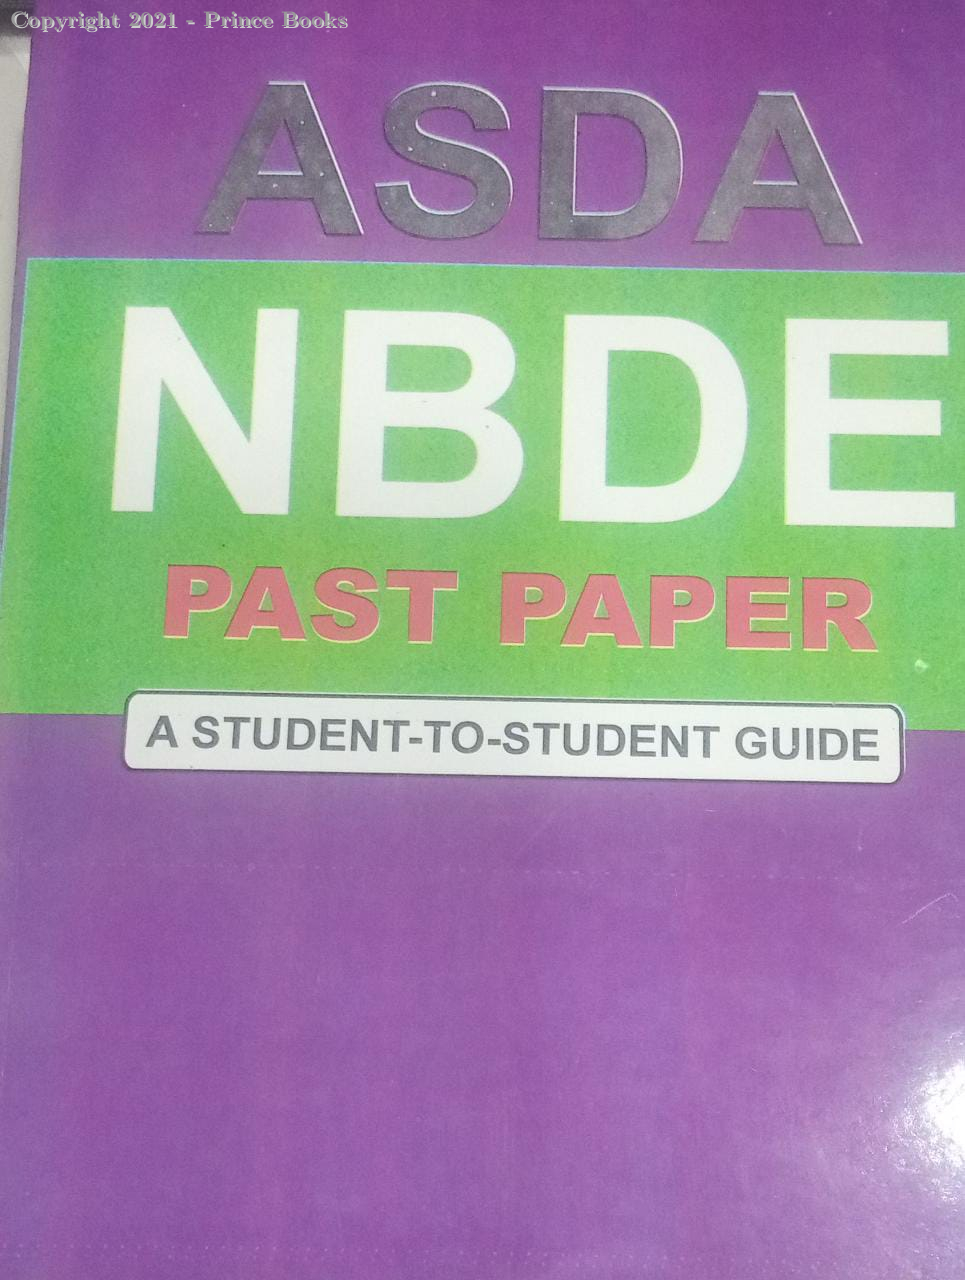 asda nbde past paper